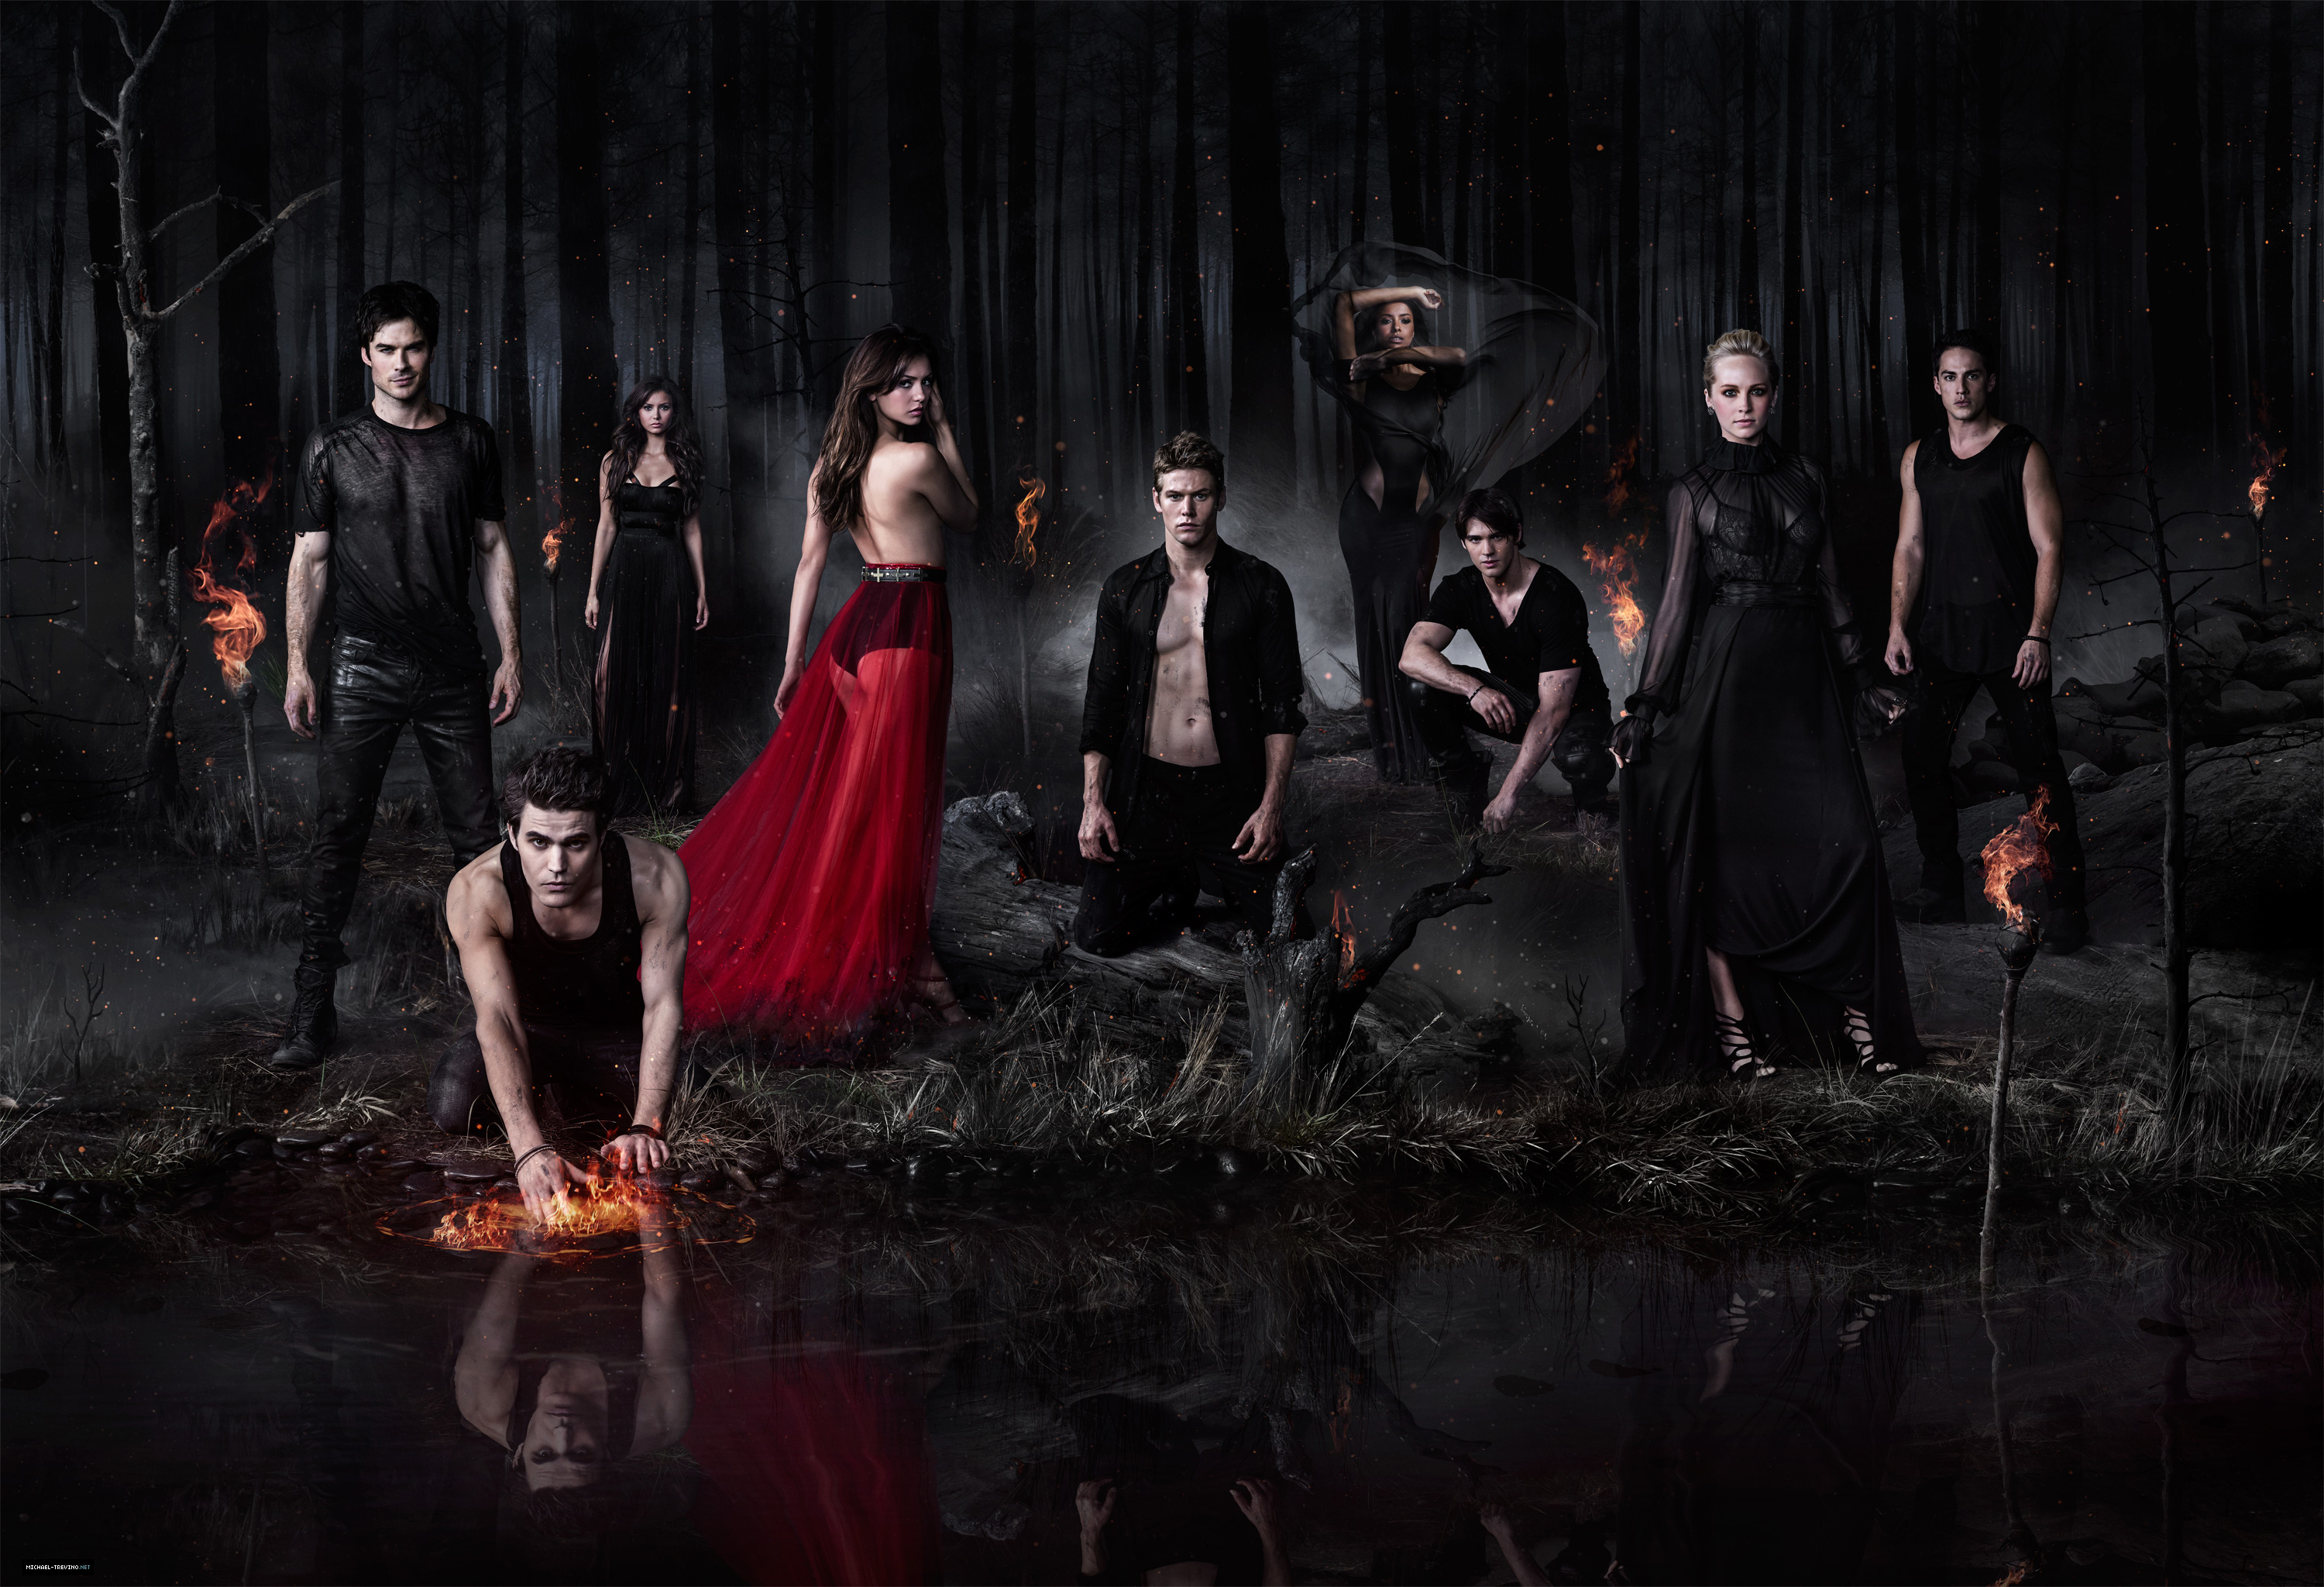 the vampire diaries damon and elena season 5